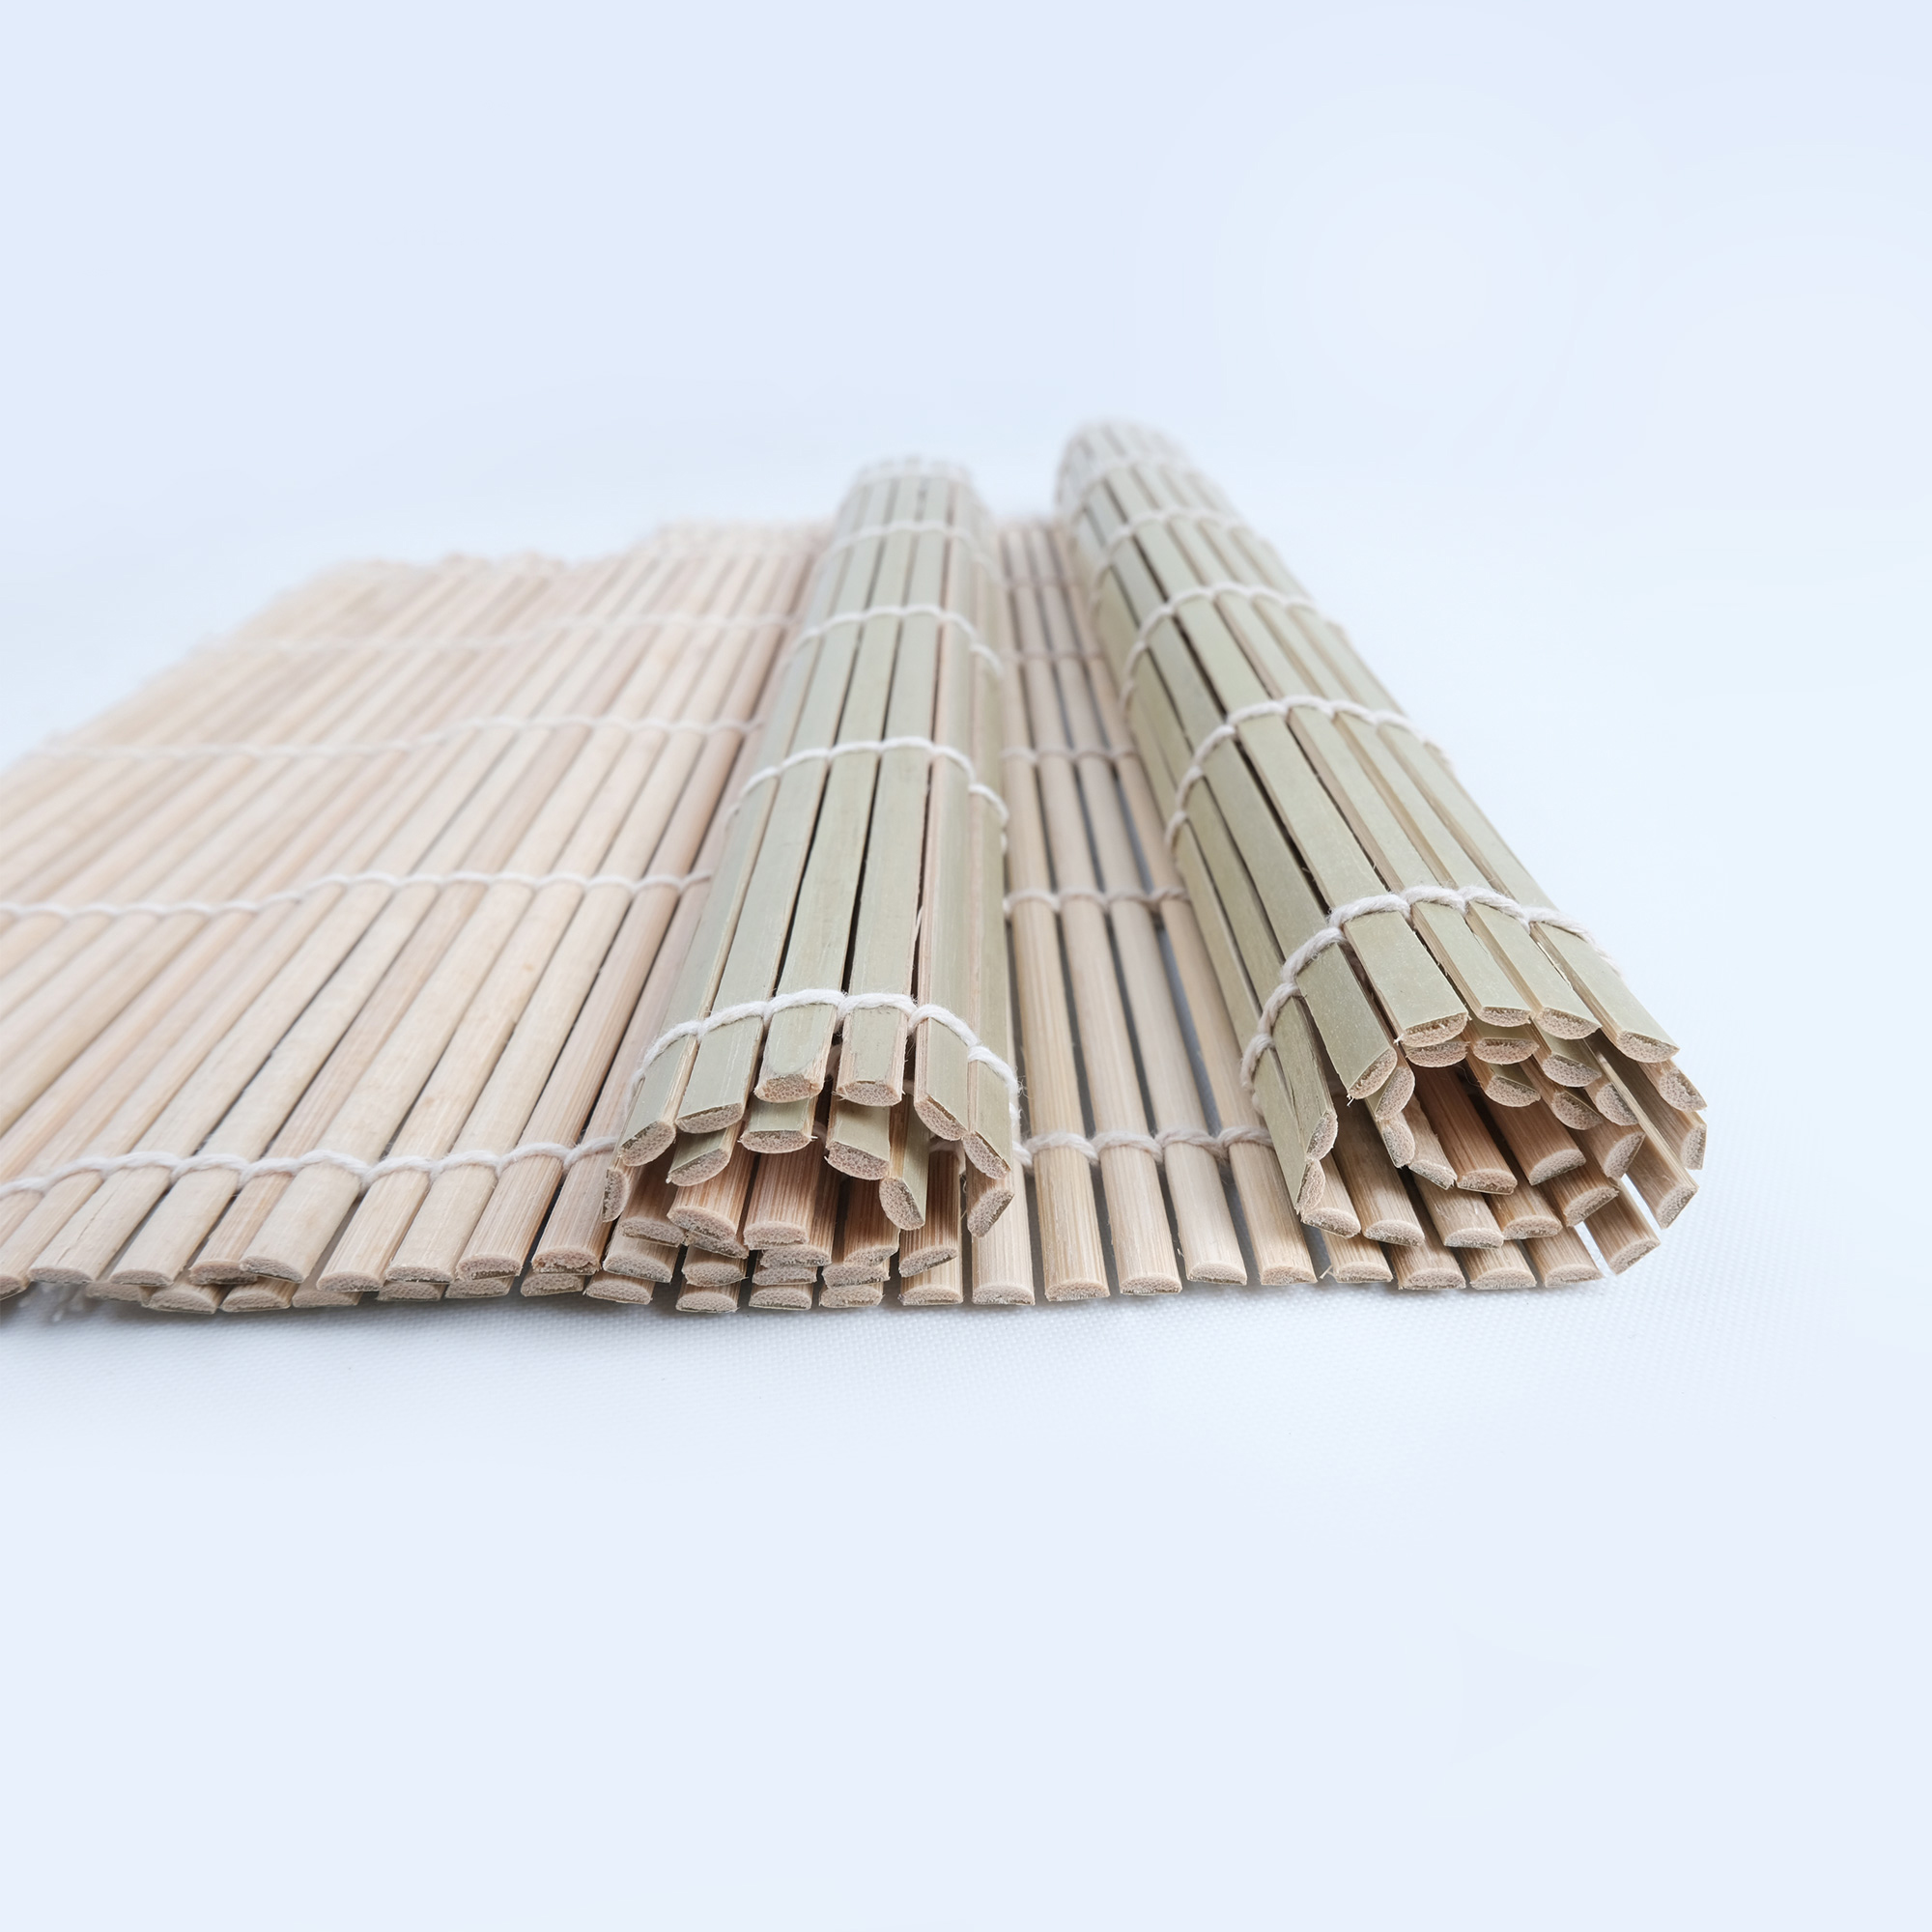 Kiya Natural Polished Bamboo Sushi Rolling Mat (Made in Japan